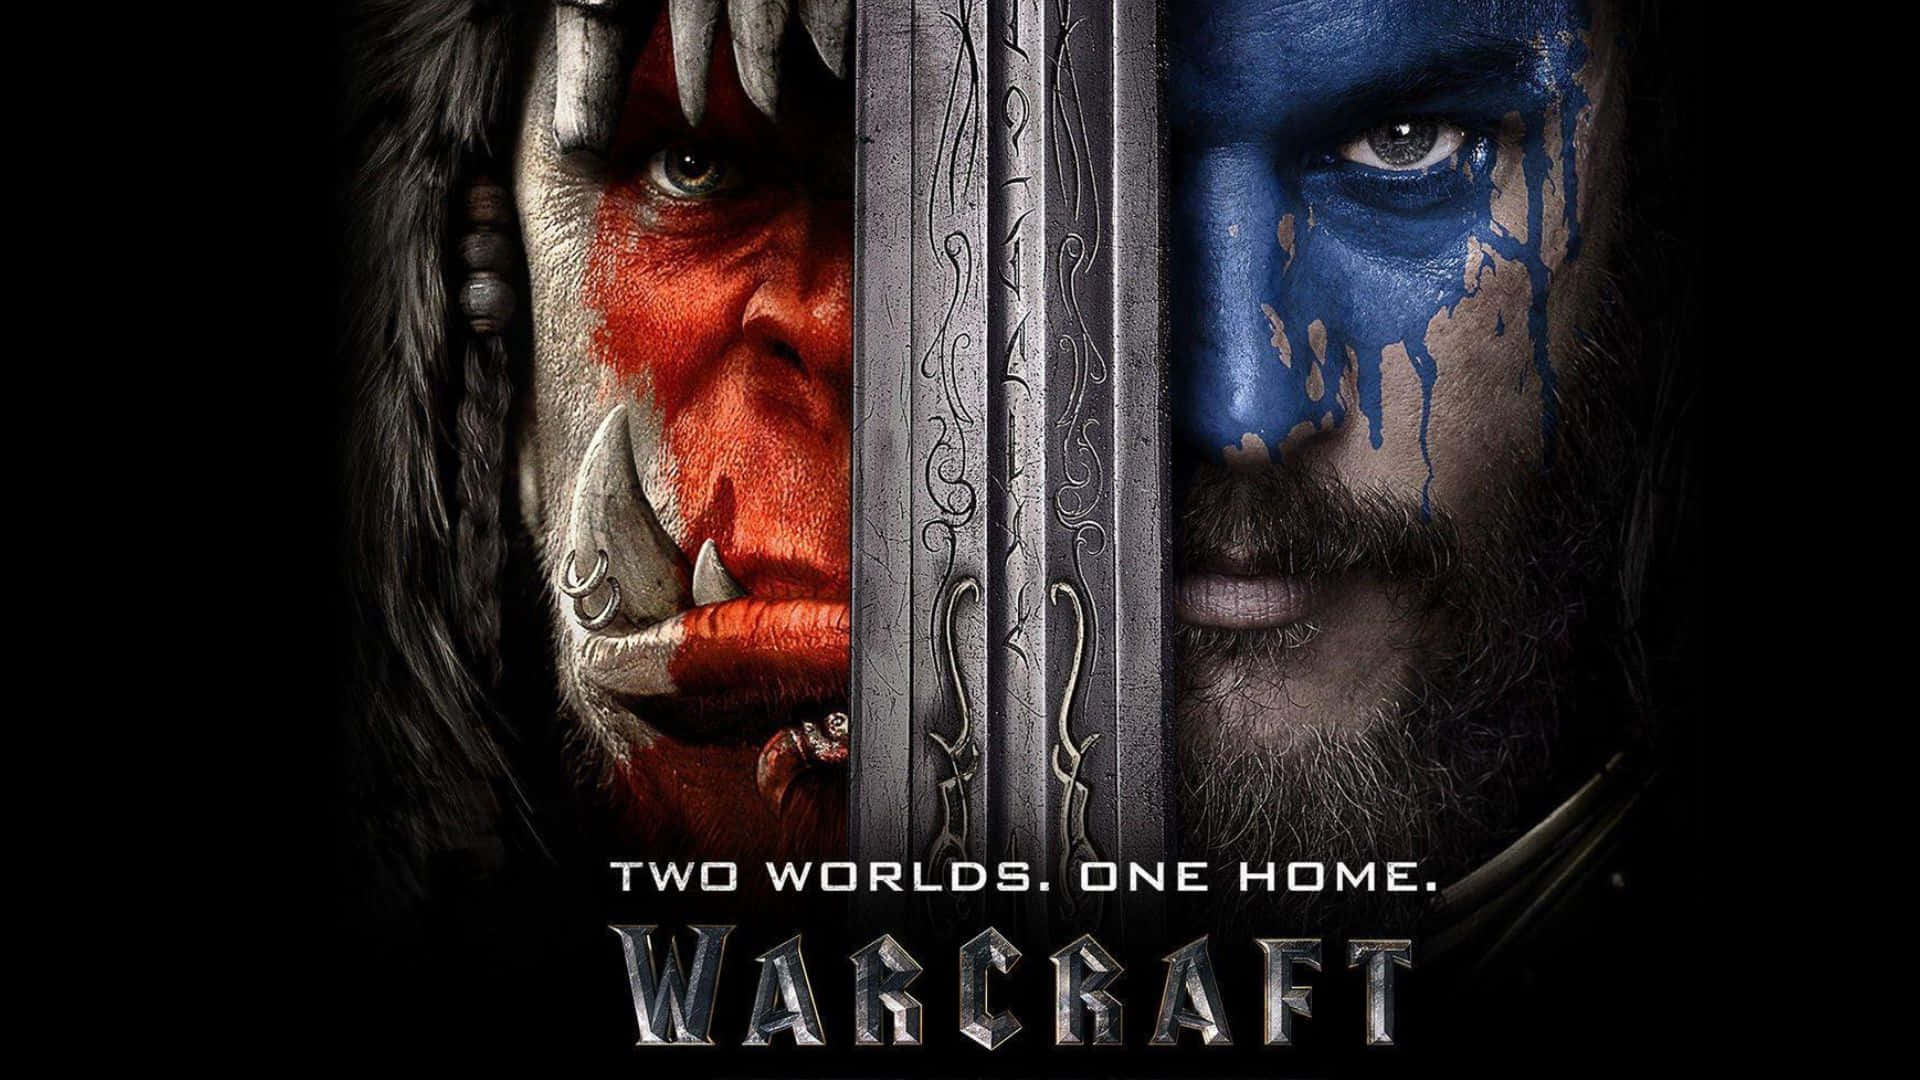 An Epic Battle - Warcraft Movie Poster Wallpaper